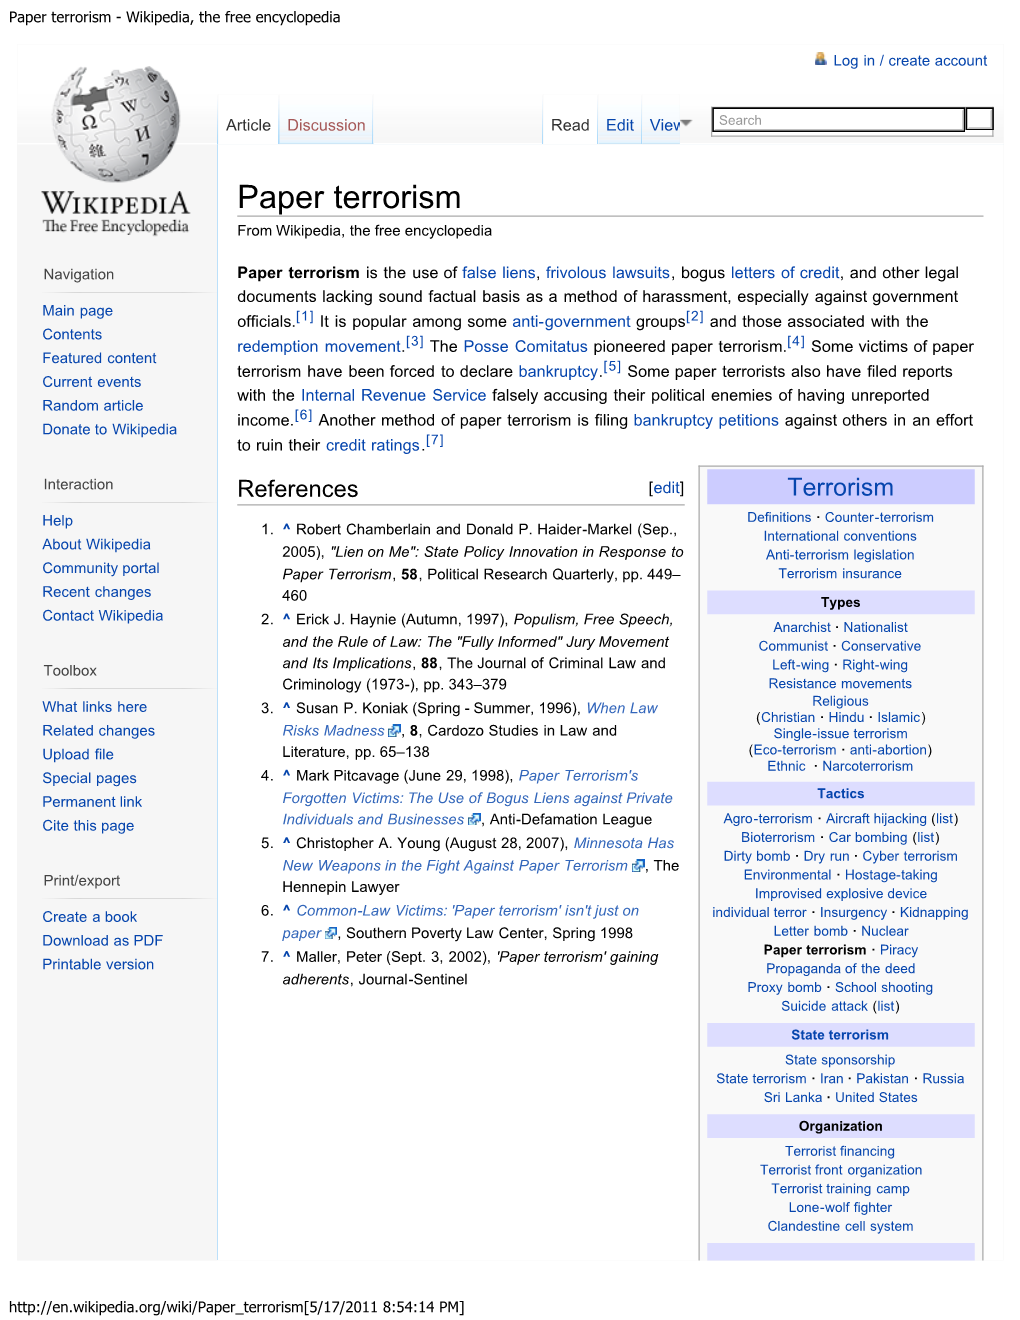 Paper Terrorism - Wikipedia, the Free Encyclopedia